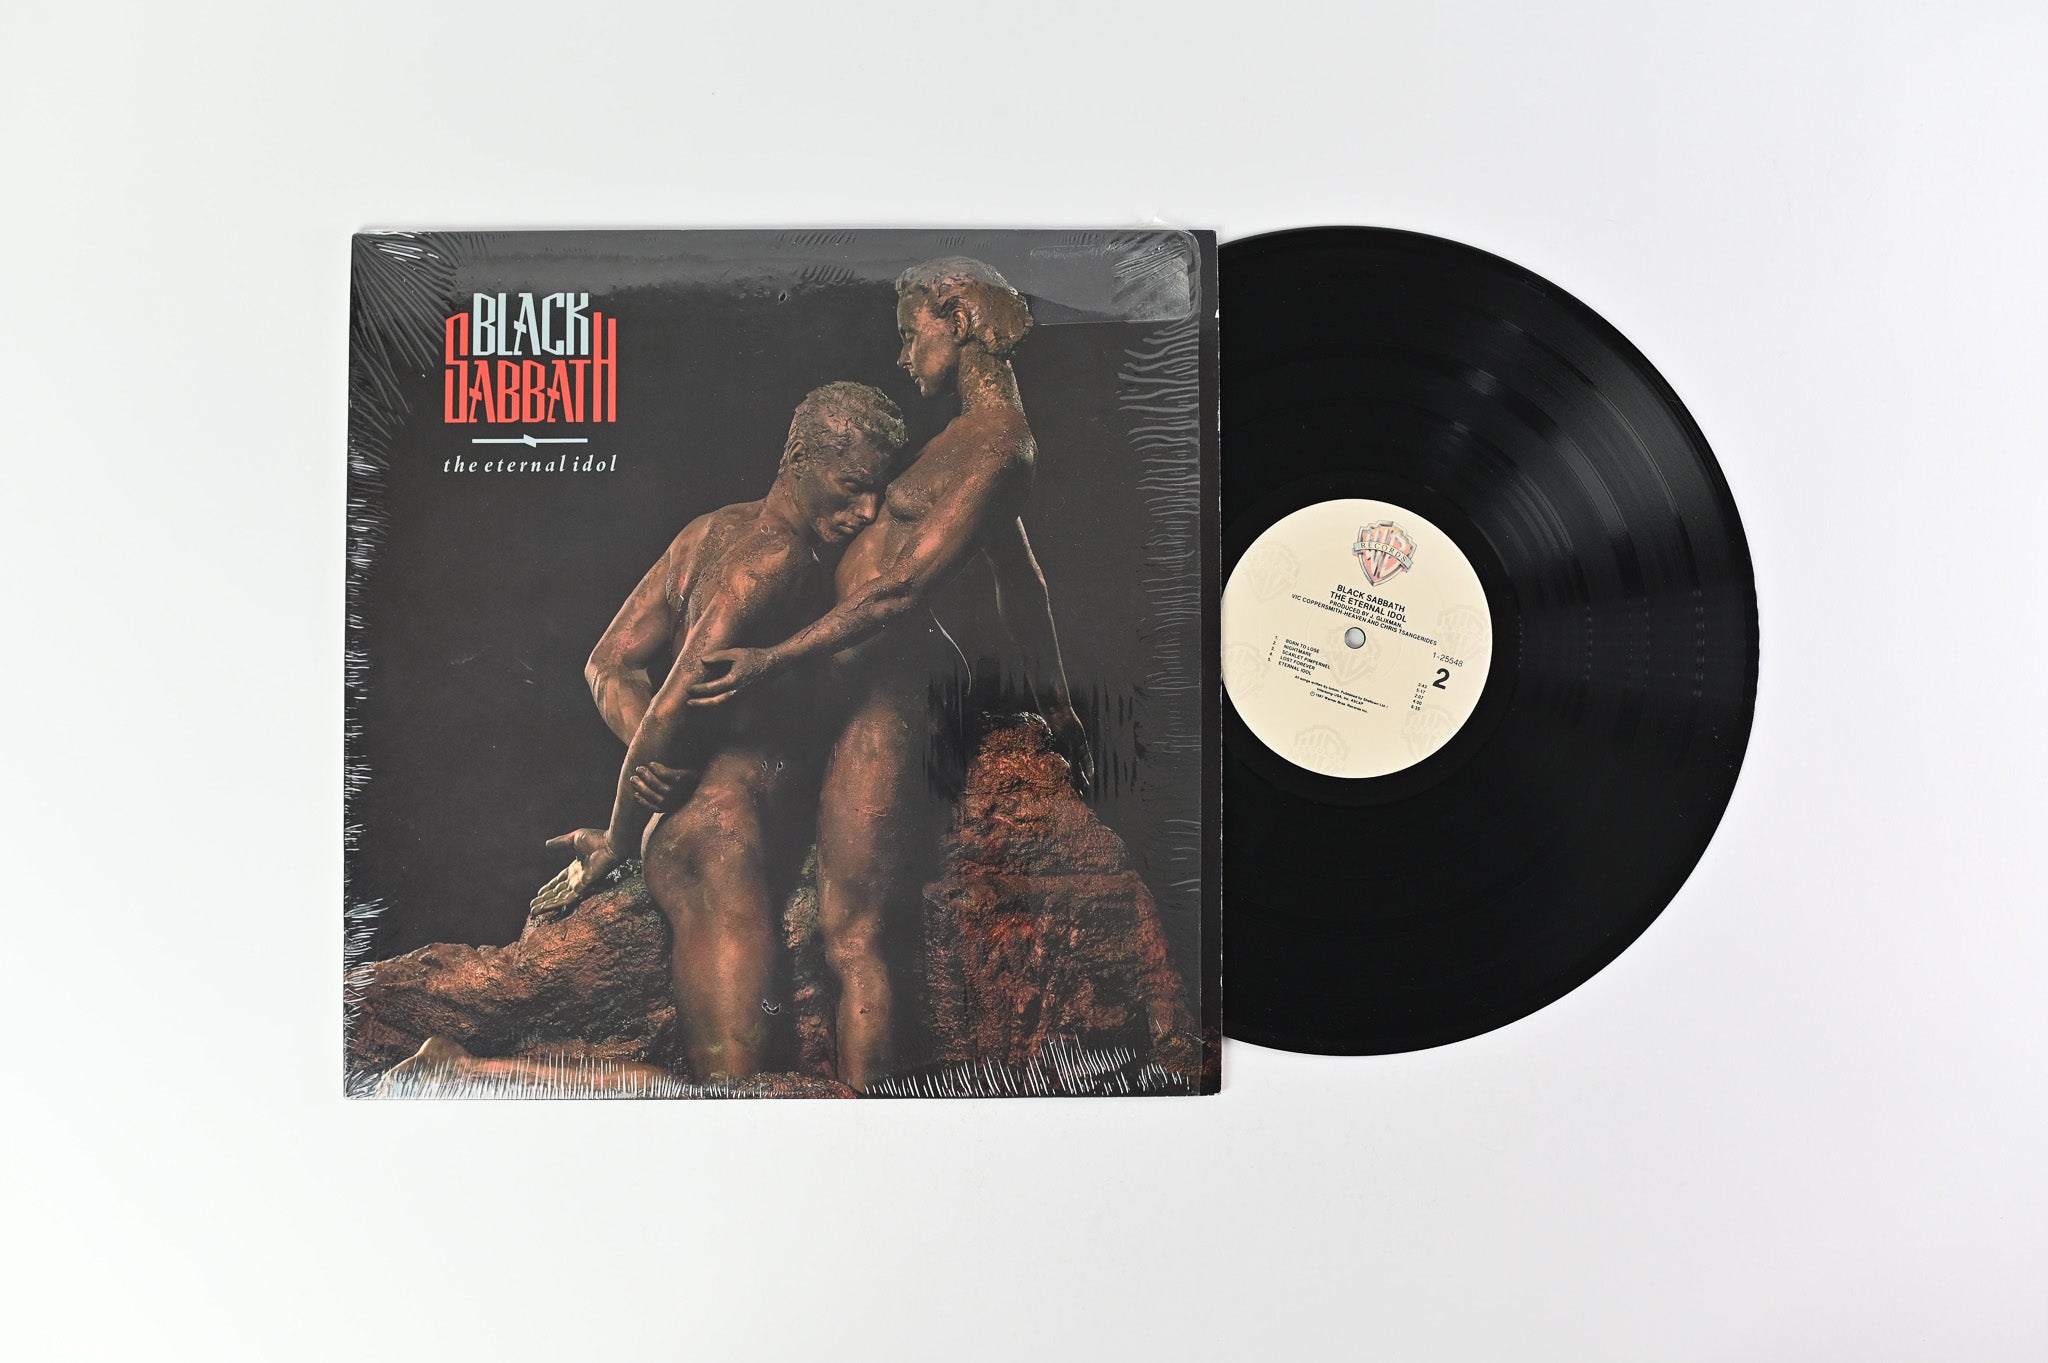 Black Sabbath - The Eternal Idol on Warner Bros. Records